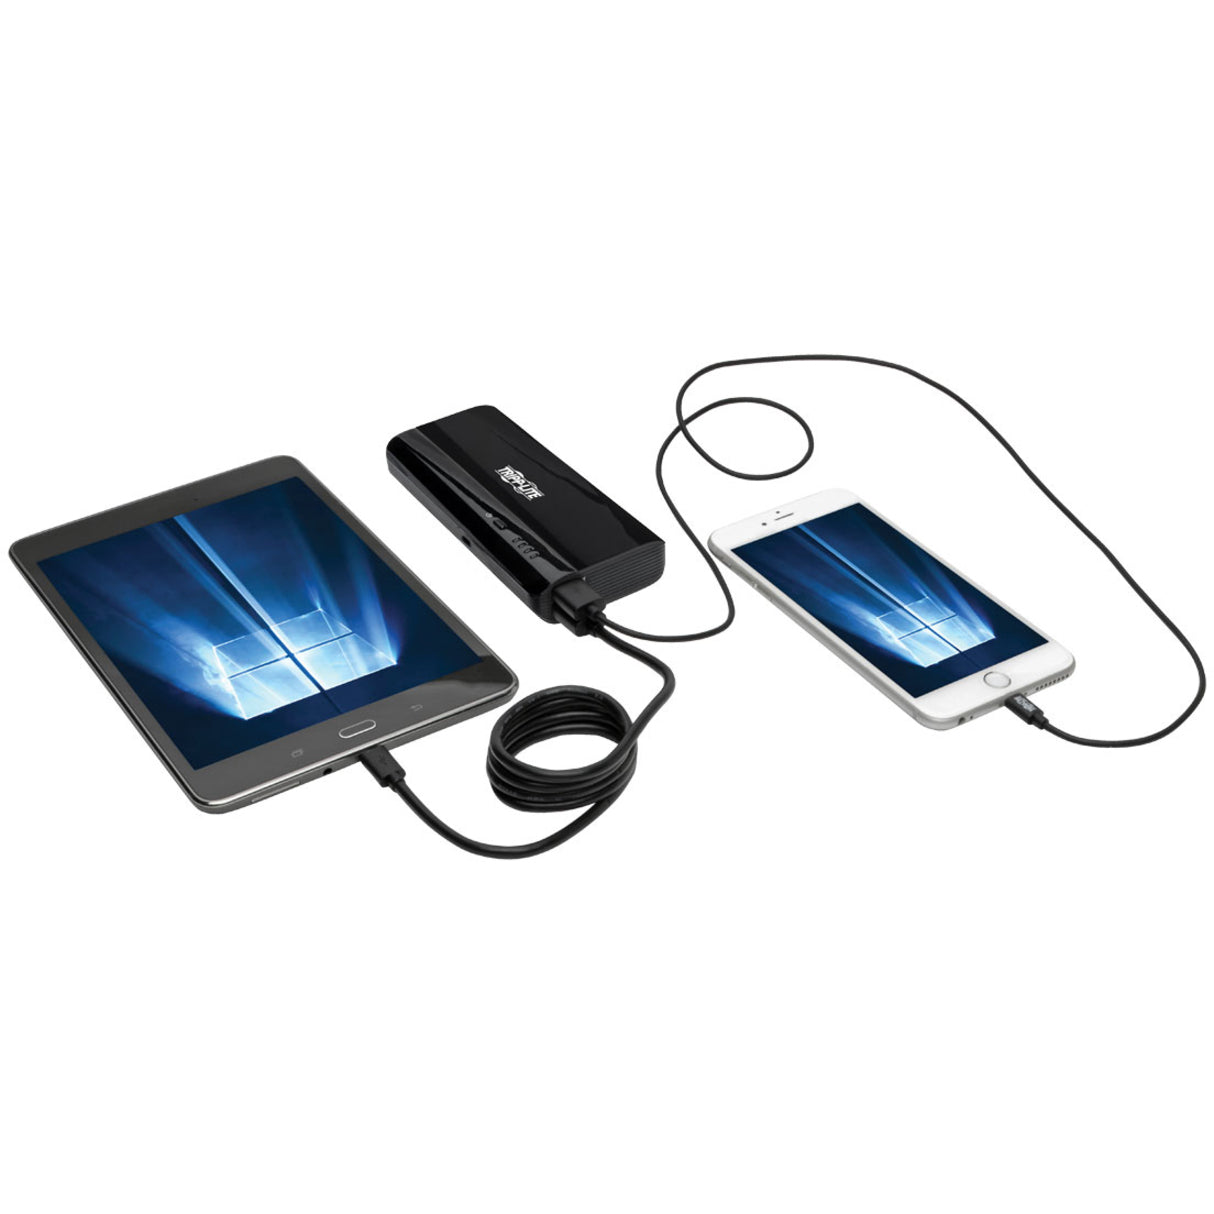 Tripp Lite UPB-10K4-S2U Power Bank, USB Battery Charger Mobile Power Bank 10.4K mAh w/ Auto-Sensing